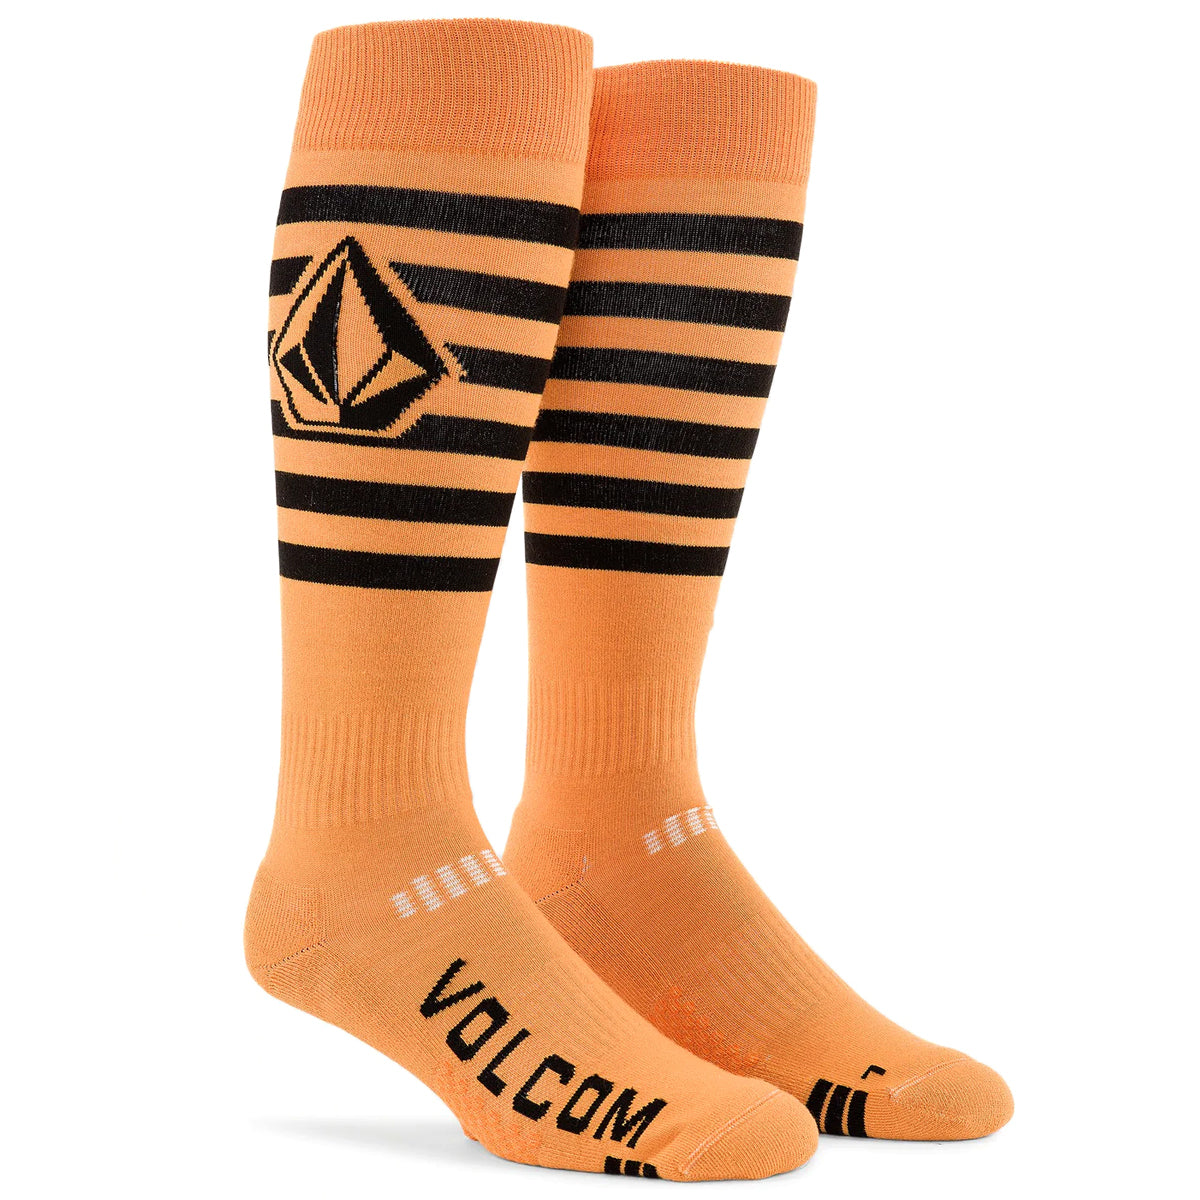 Volcom Kootney Snowboard Socks - Gold image 1